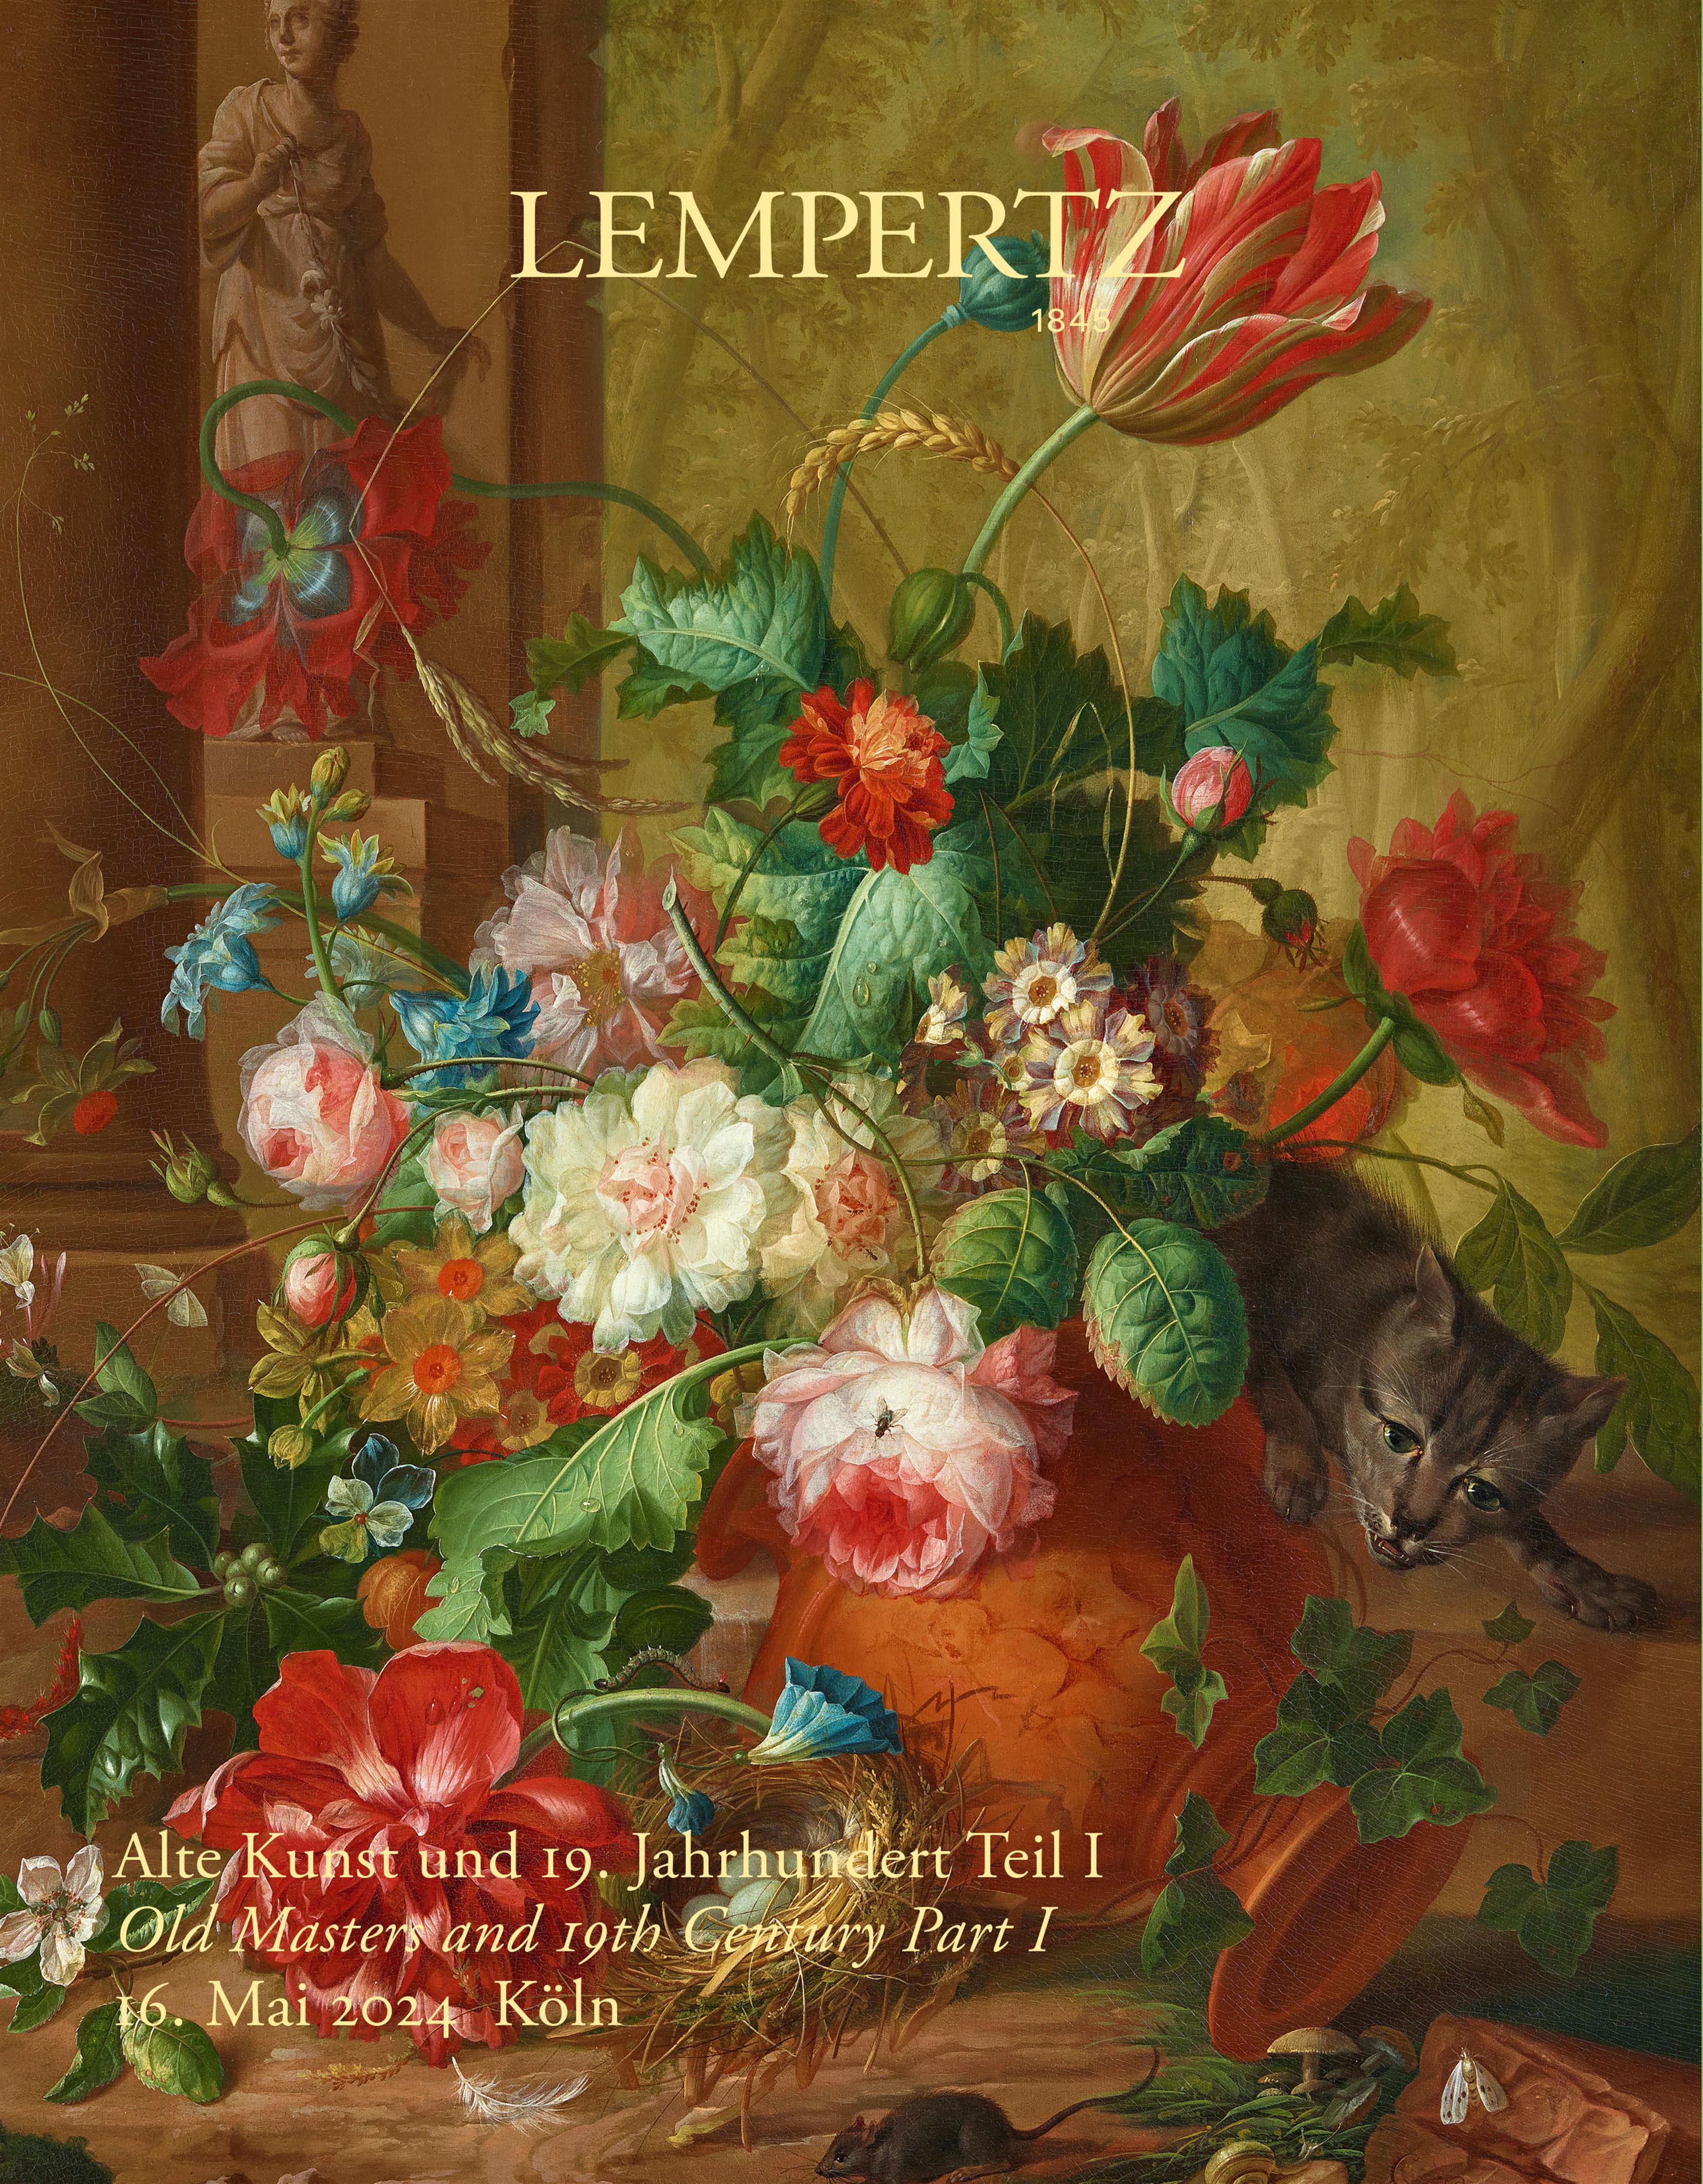 Auction house - Old Masters and 19th Century, Part I - Auction Catalogue 1245 – Auction House Lempertz